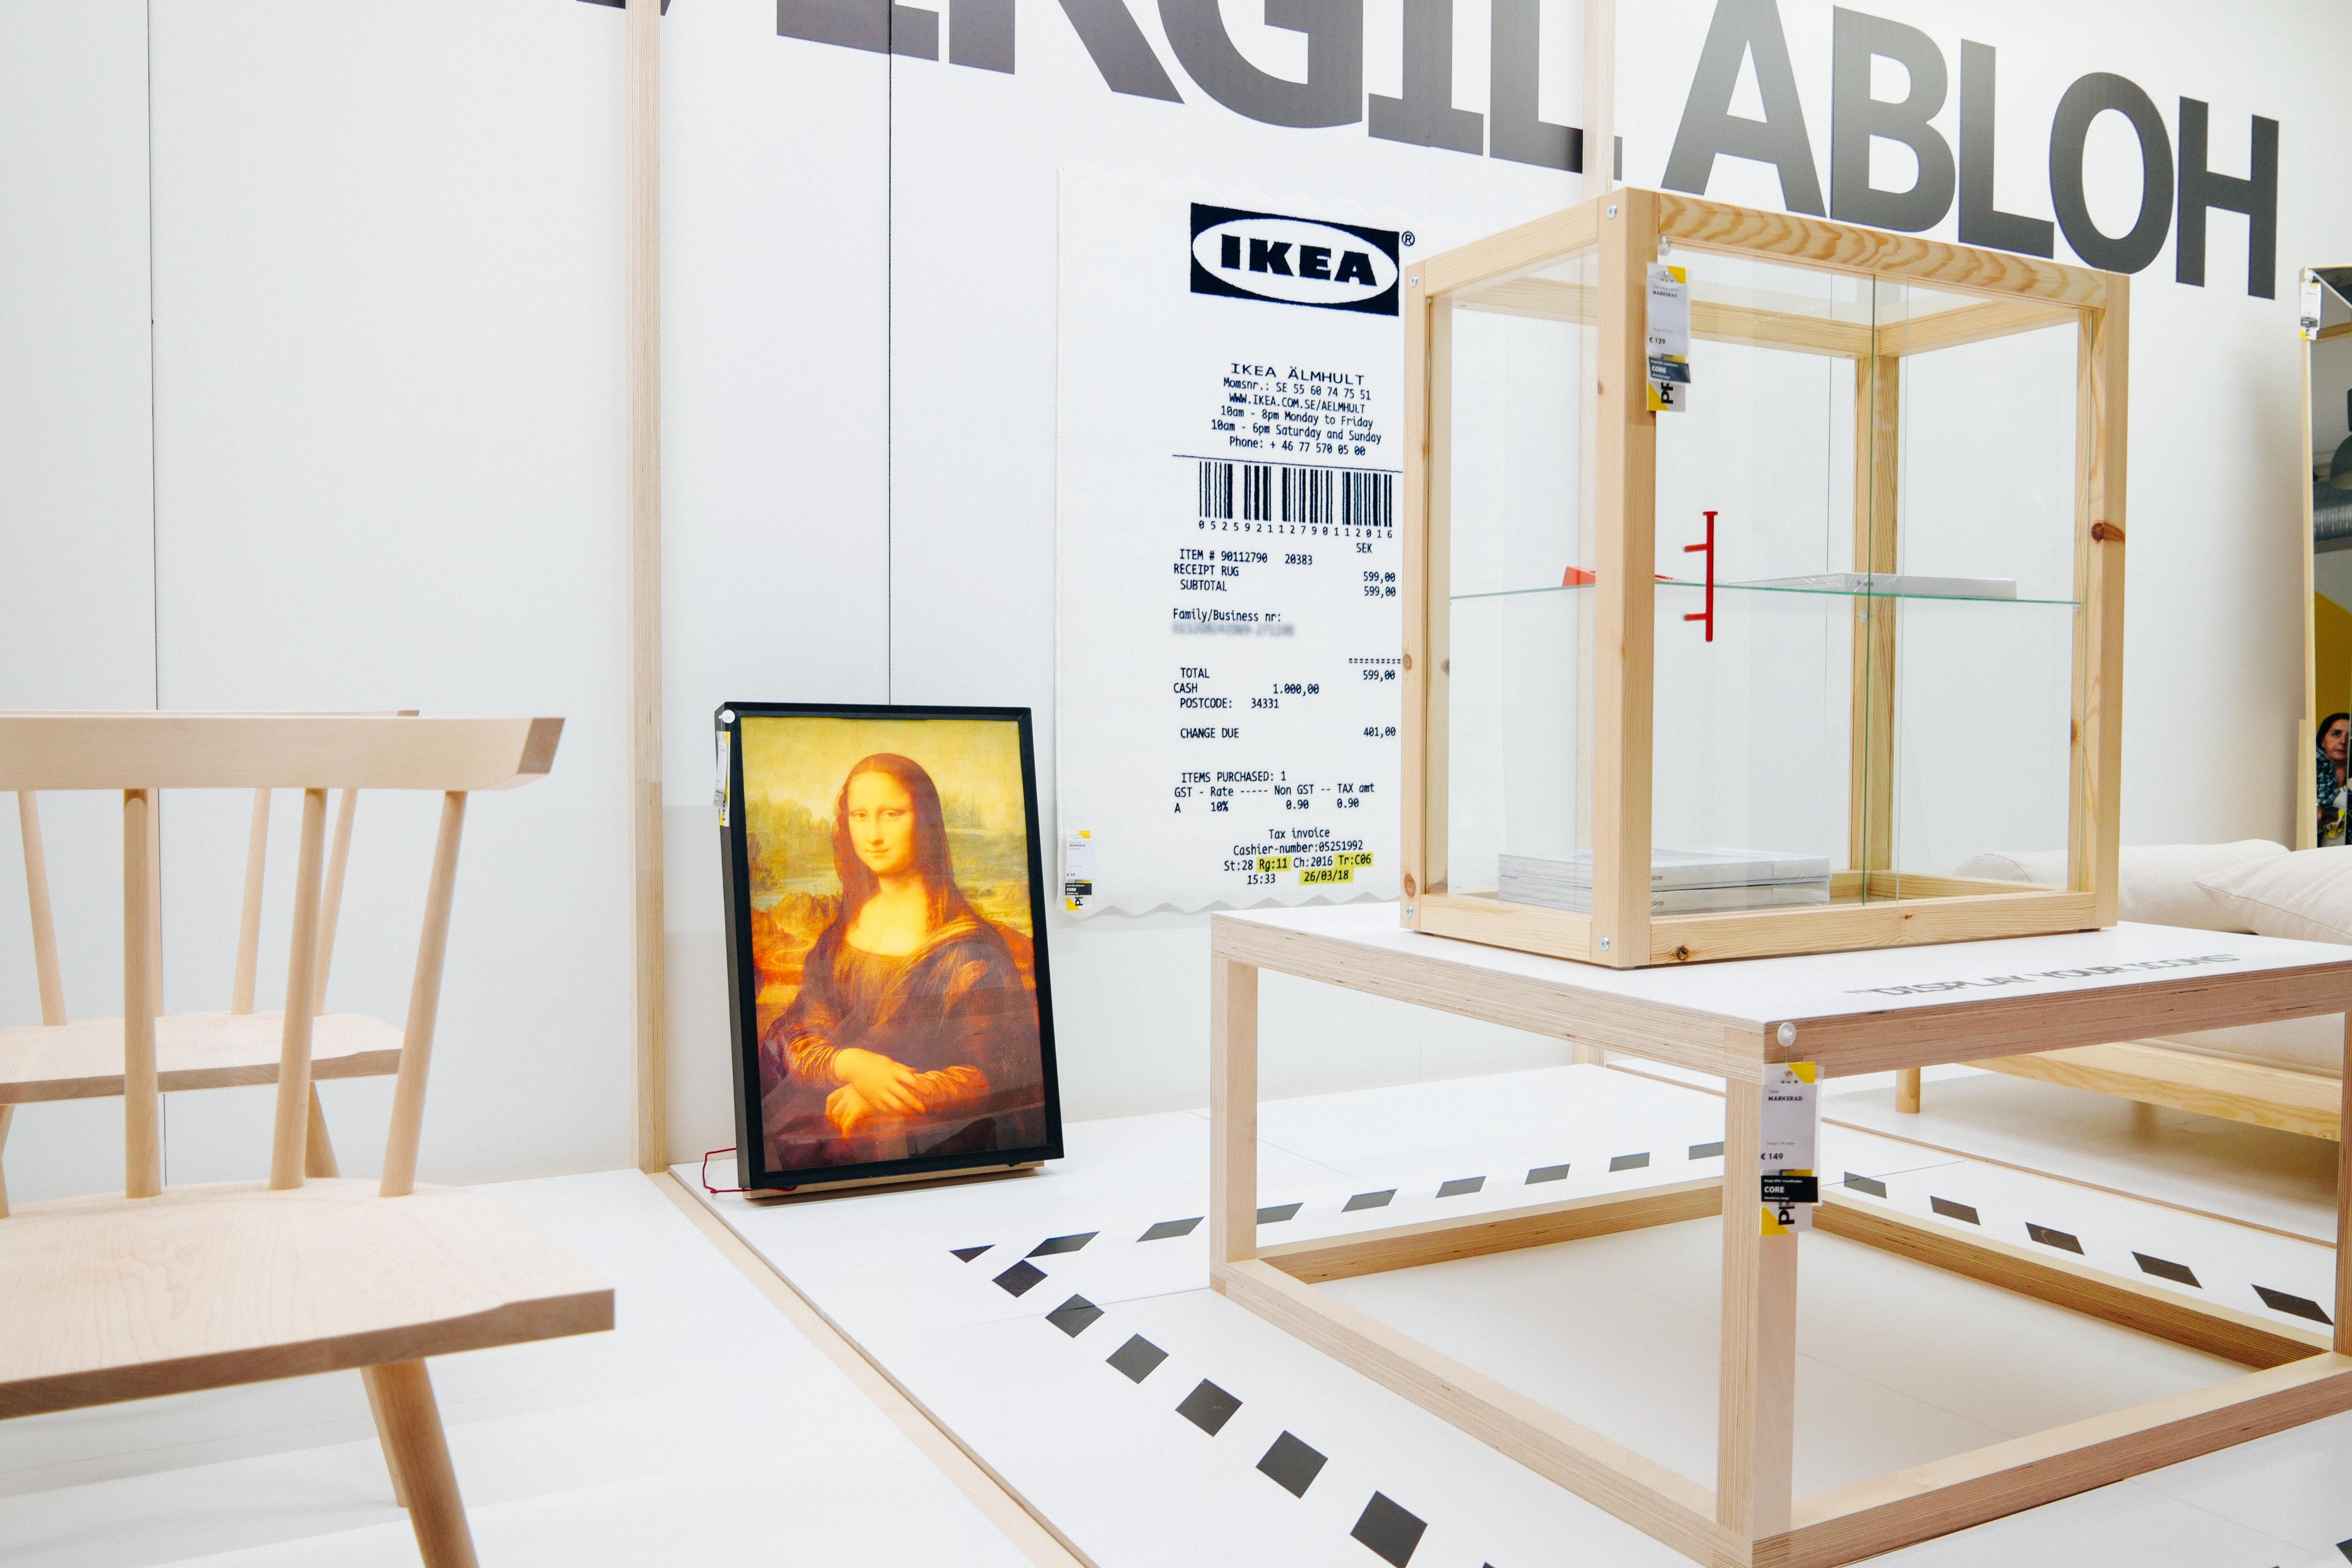 Closer Look at Virgil Abloh's IKEA Collaboration Furniture "MARKERAD"